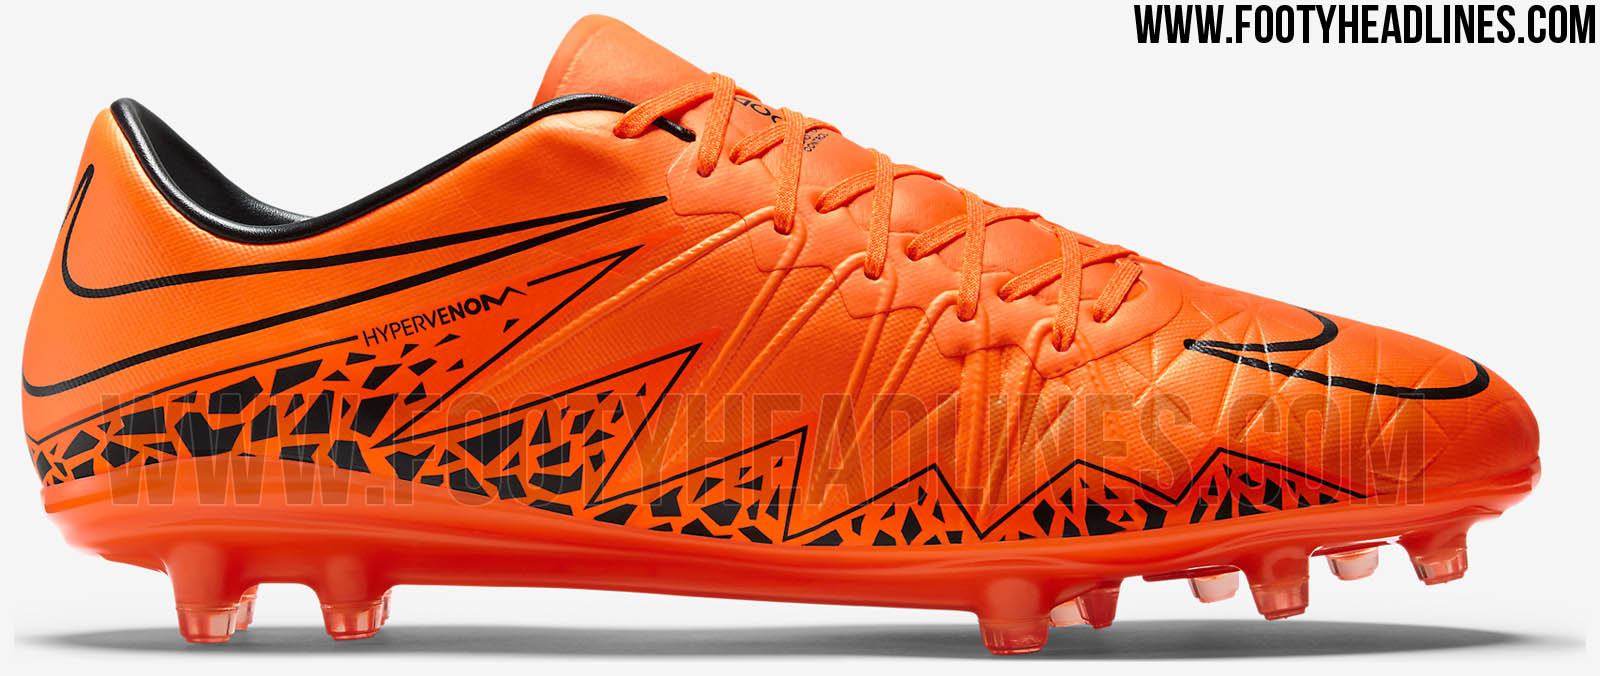 Orange Nike Phinish 2015 Boots Released -